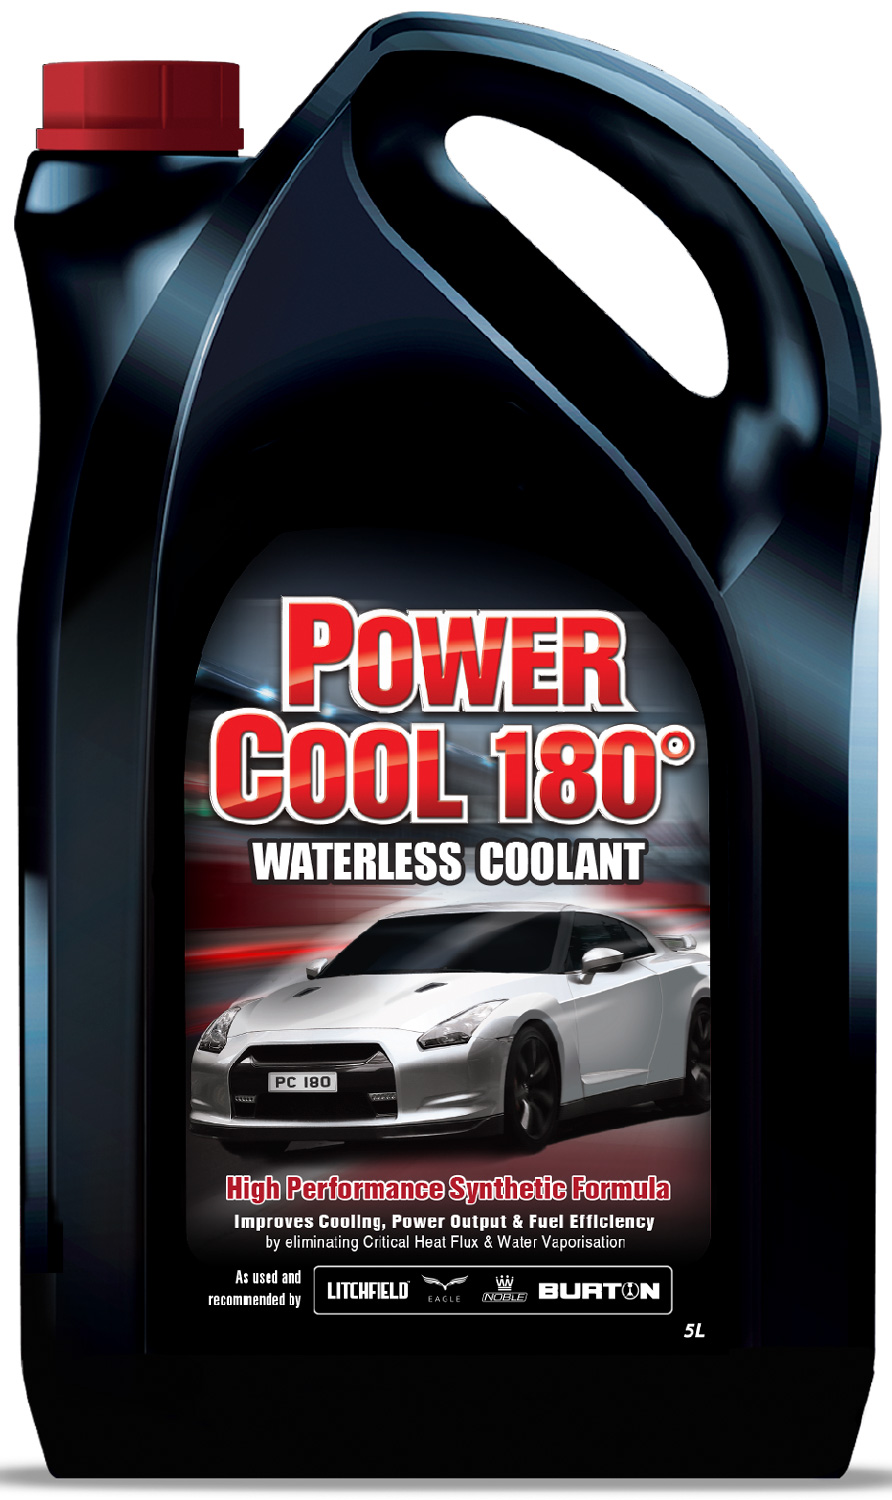 Evans Power Cool 180°, 5 Liter